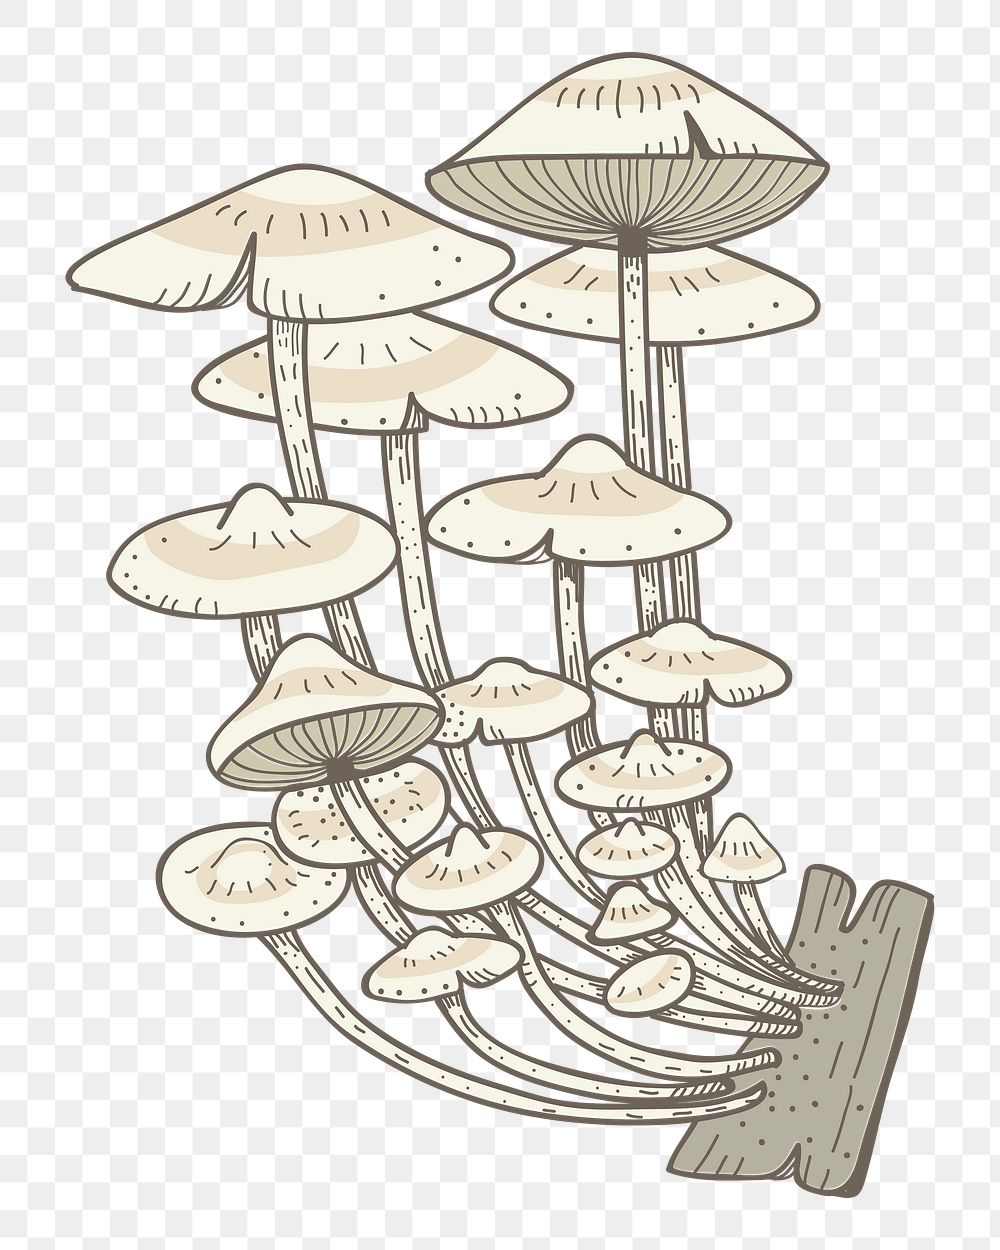 Mushroom png healthy food sticker, transparent background